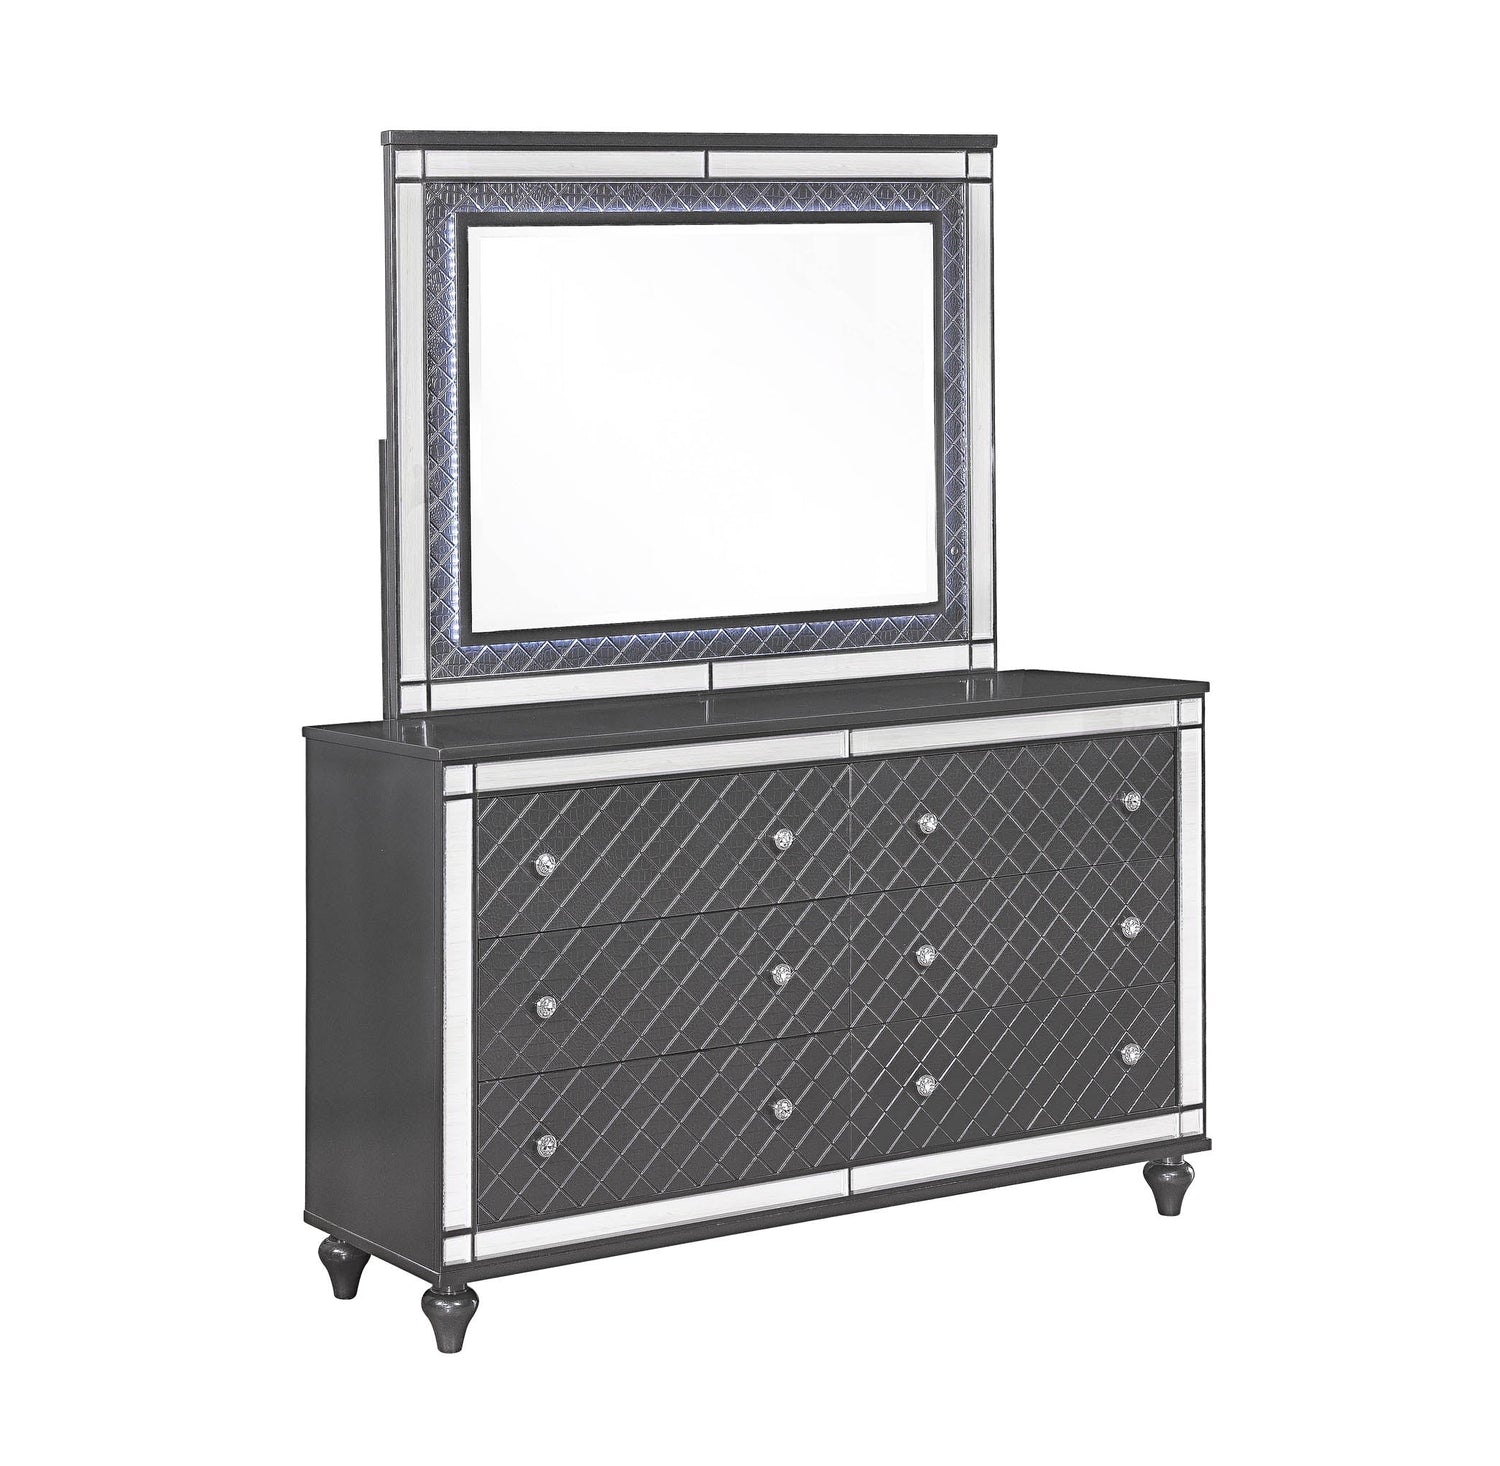 Refino Gray LED Upholstered Panel Bedroom Set - SET | B1670-K-HB | B1670-K-FB | B1670-KQ-RAIL | B1670-1 | B1670-11 | B1670-2 | B1670-4 - Bien Home Furniture &amp; Electronics